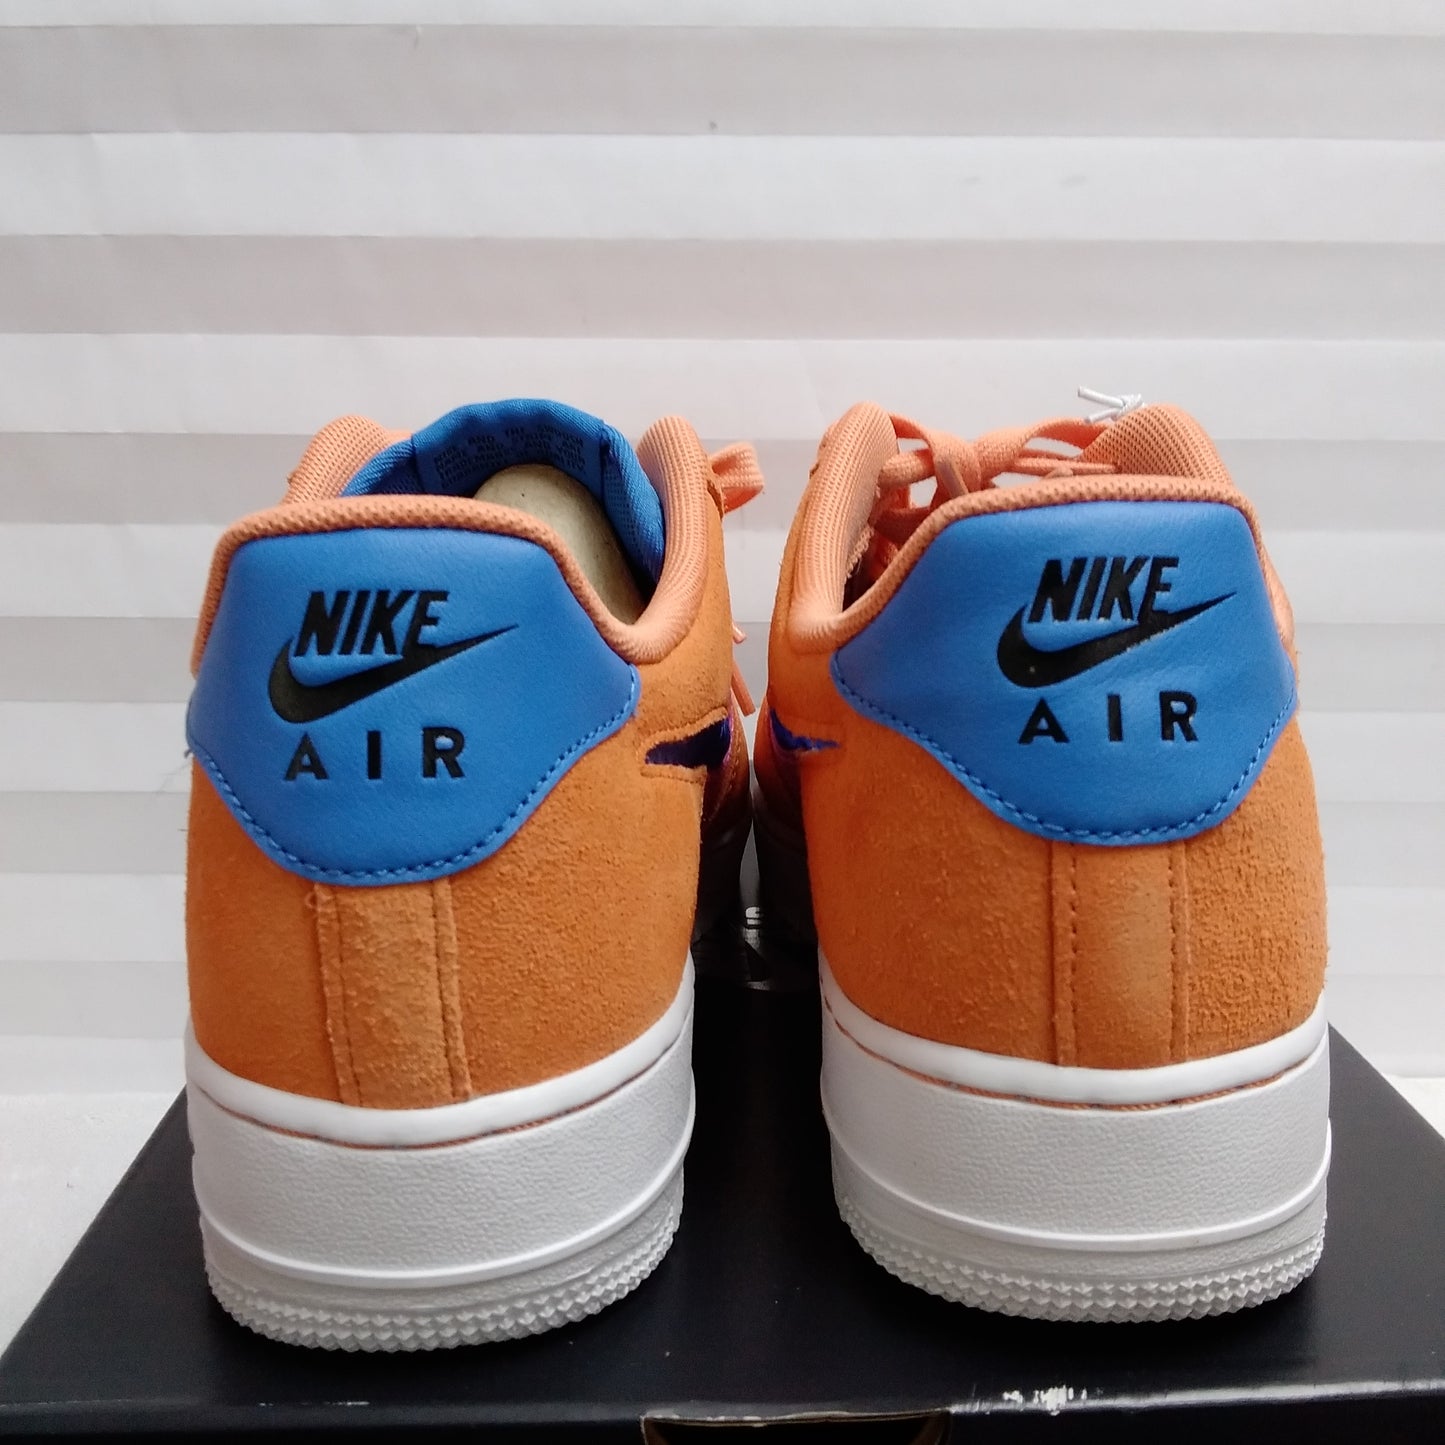 Nike Air Force 1 '07 LV8 Orange Trance Men's Shoes, Size: 9